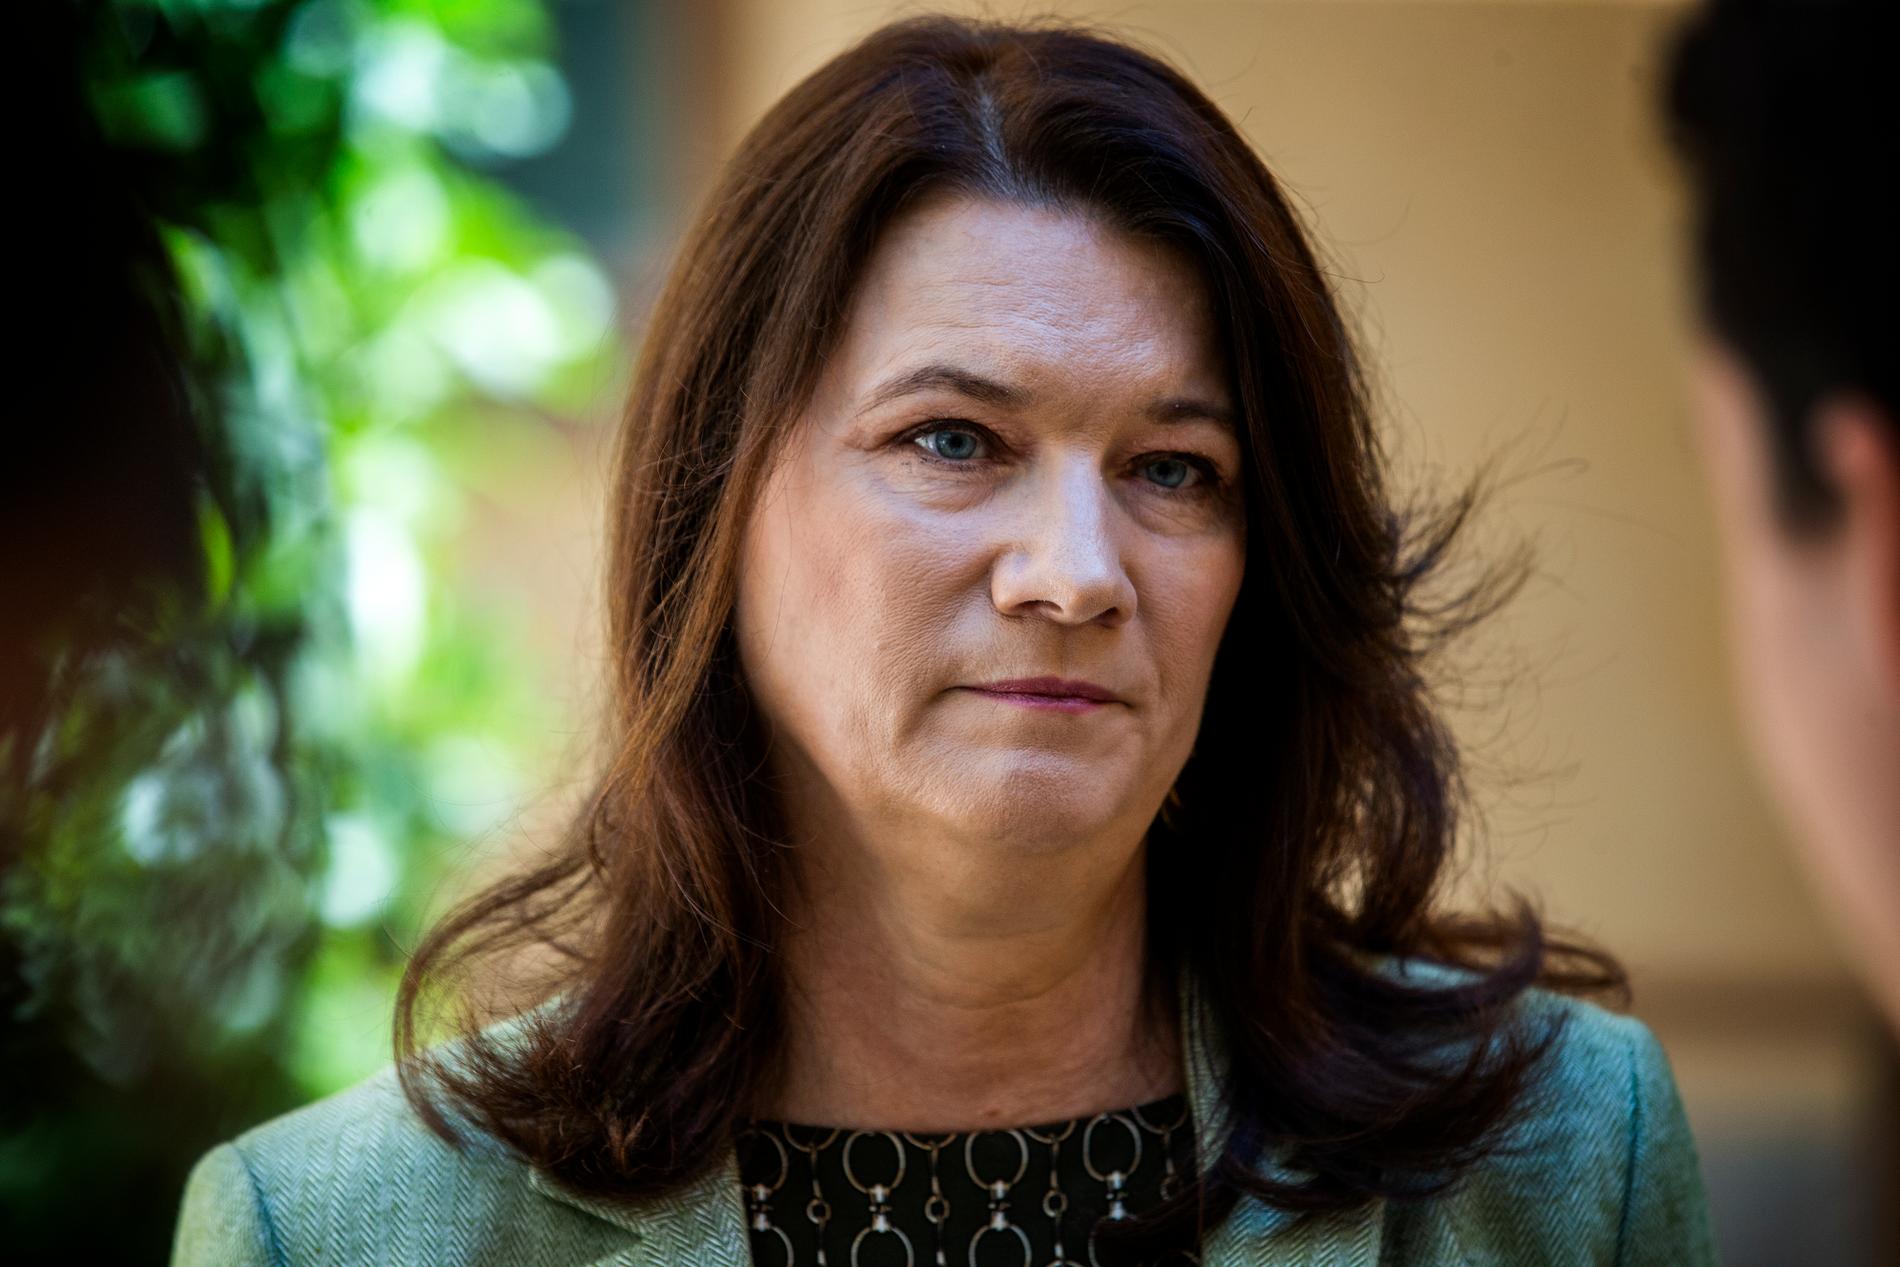 Sveriges utrikesminister Ann Linde. Arkivbild.